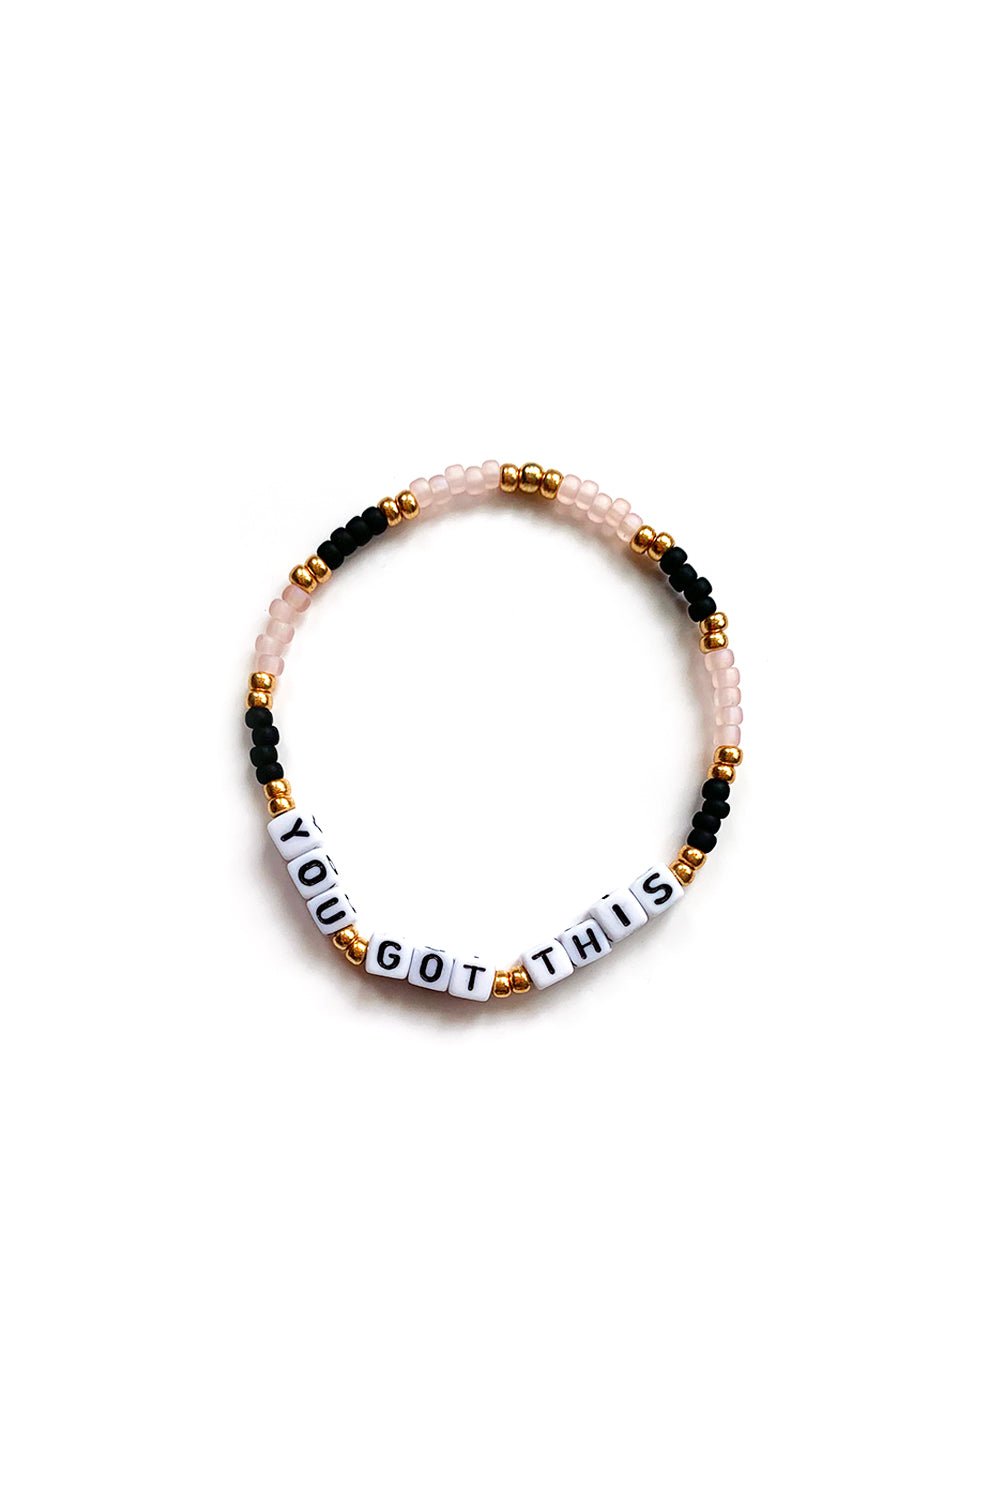 Sarah Marie Design Studio Bracelet You Got This Bracelet